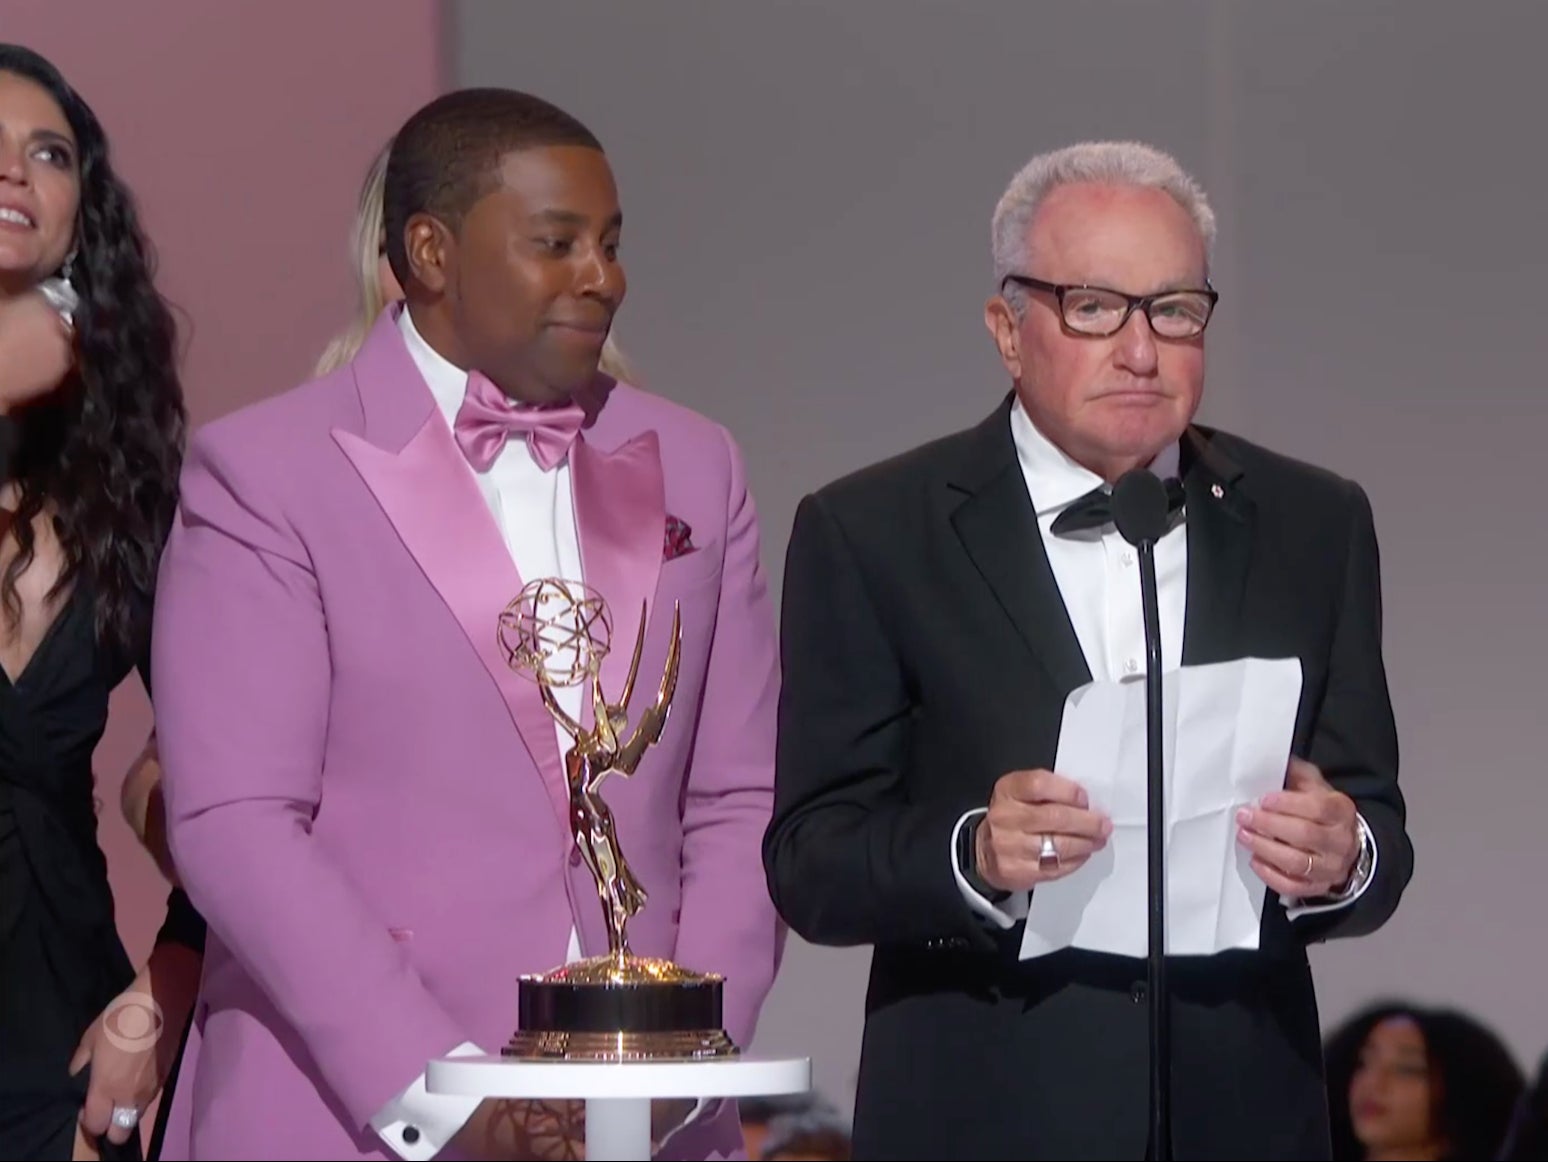 The ‘SNL’ team accept their Emmy